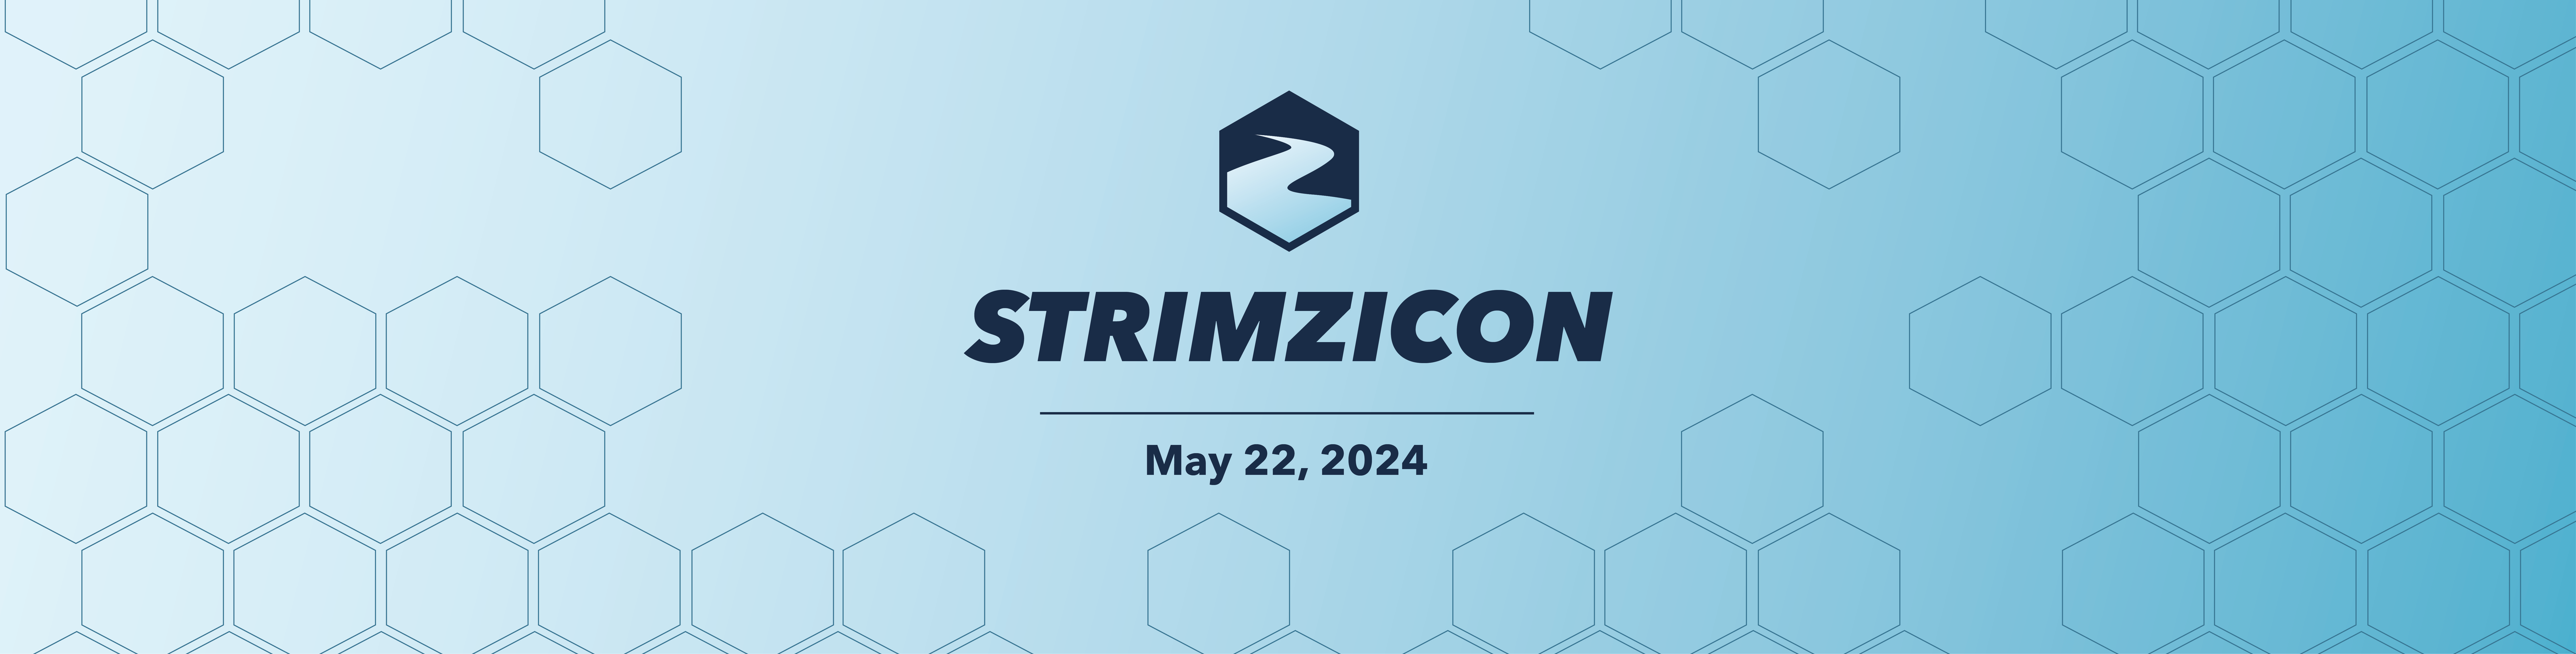 Strimzicon banner May 22, 2024